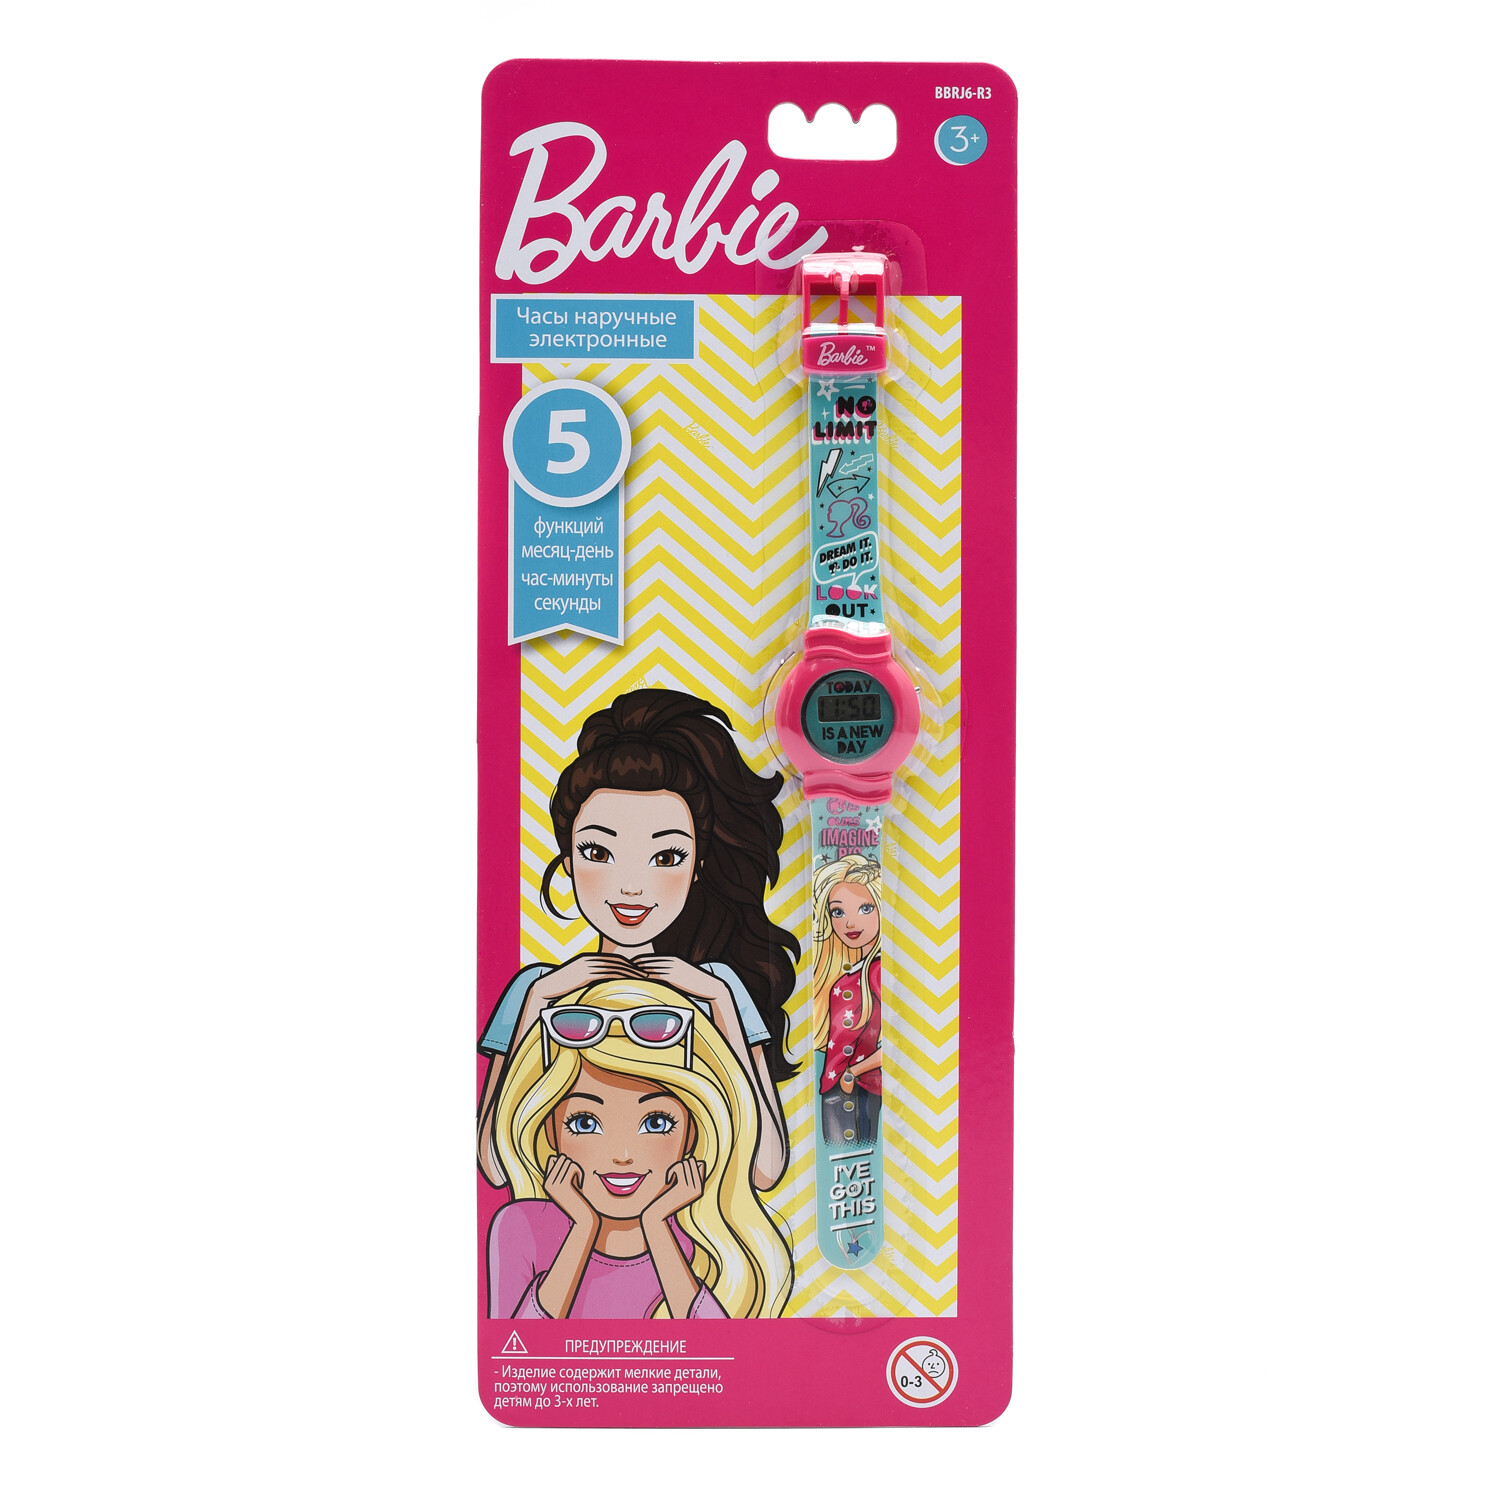 фото Часы наручные barbie электронные, розовый, бирюзовый bbrj6-r3